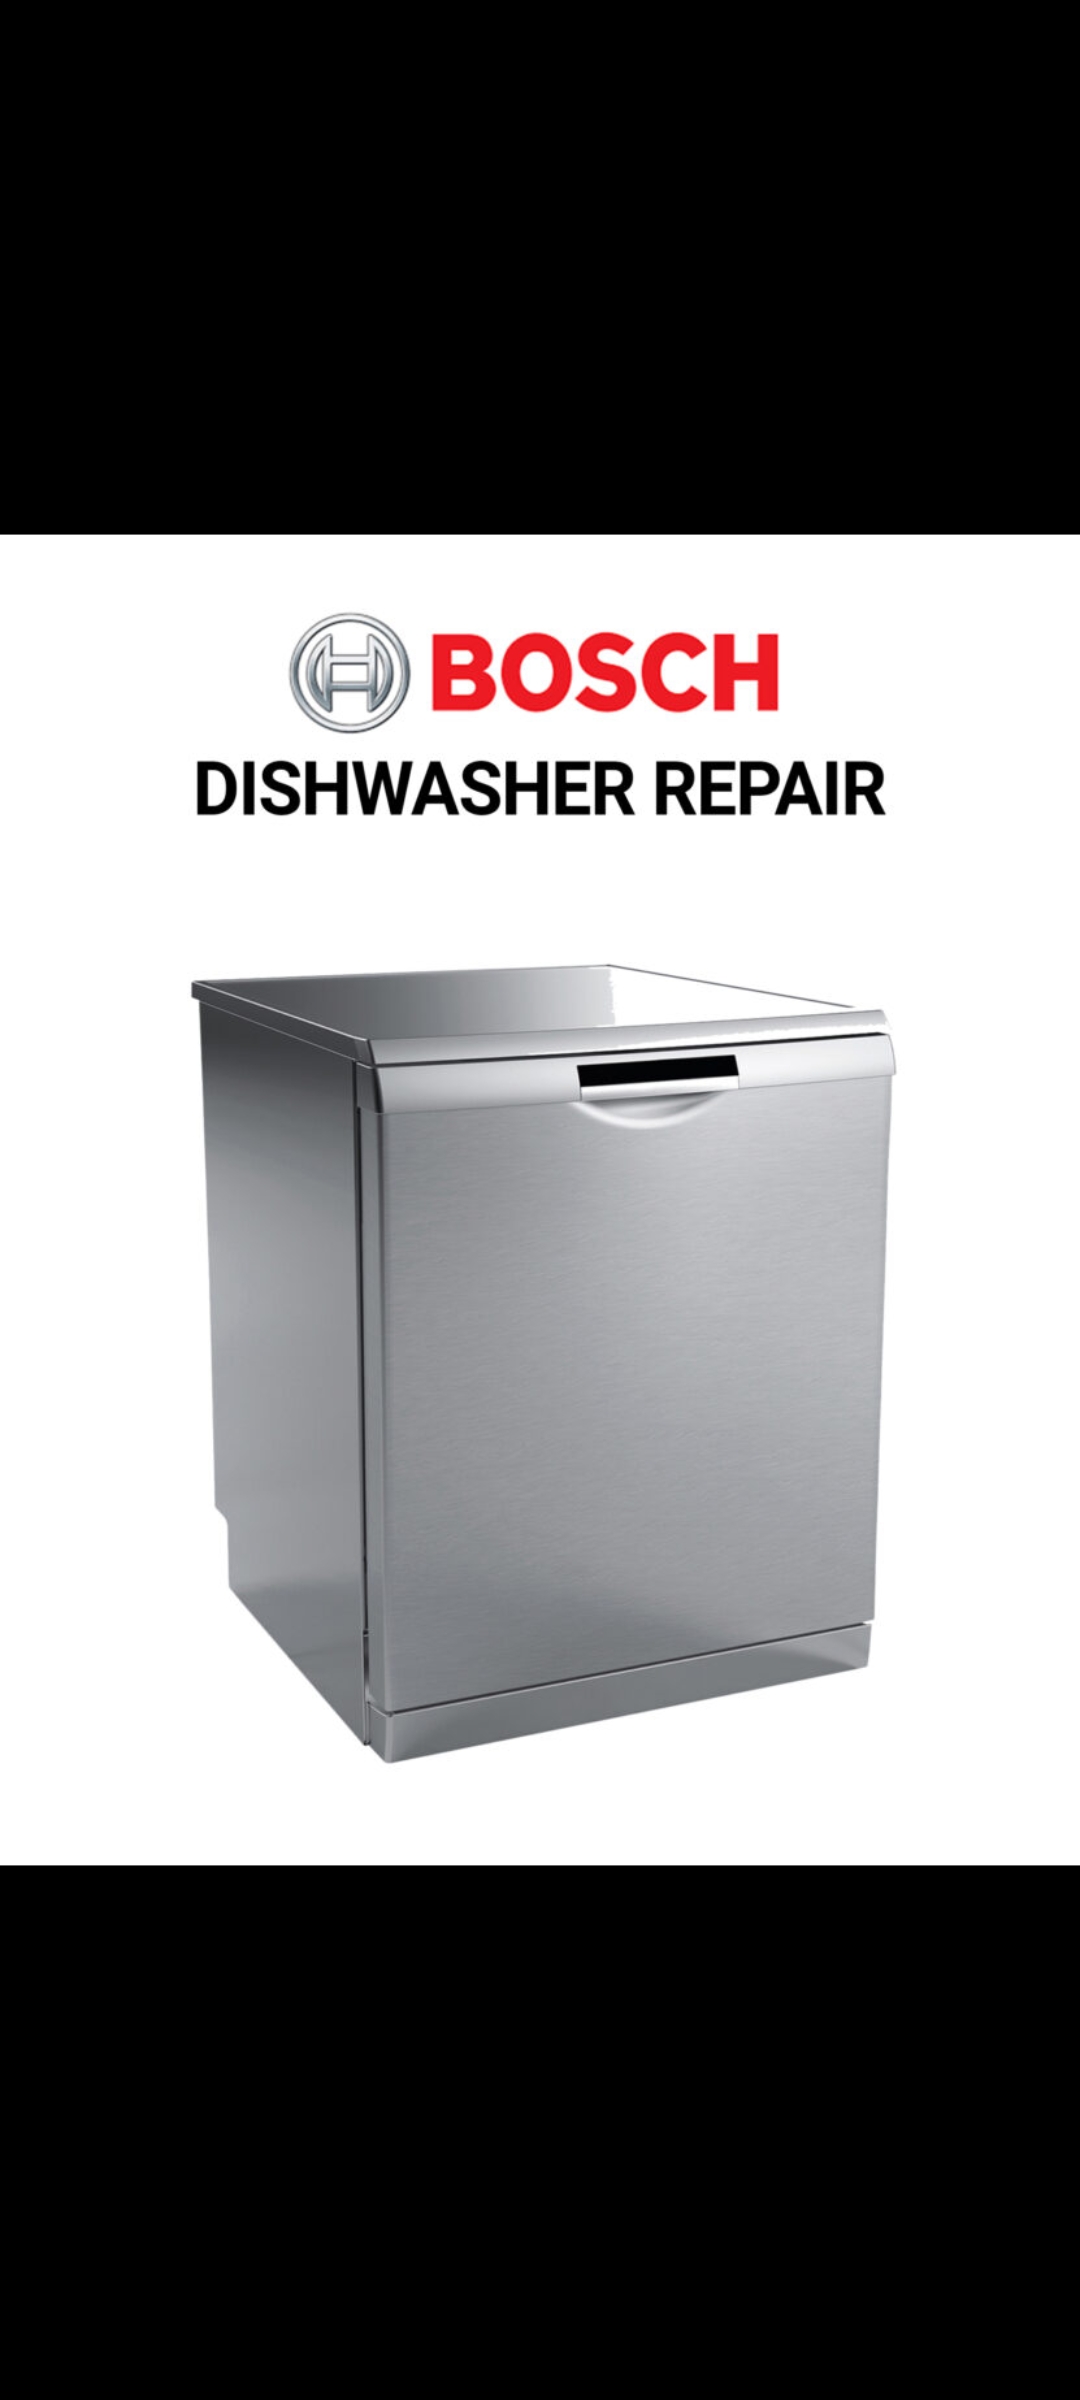 Dishwasher repair near me 0564470715